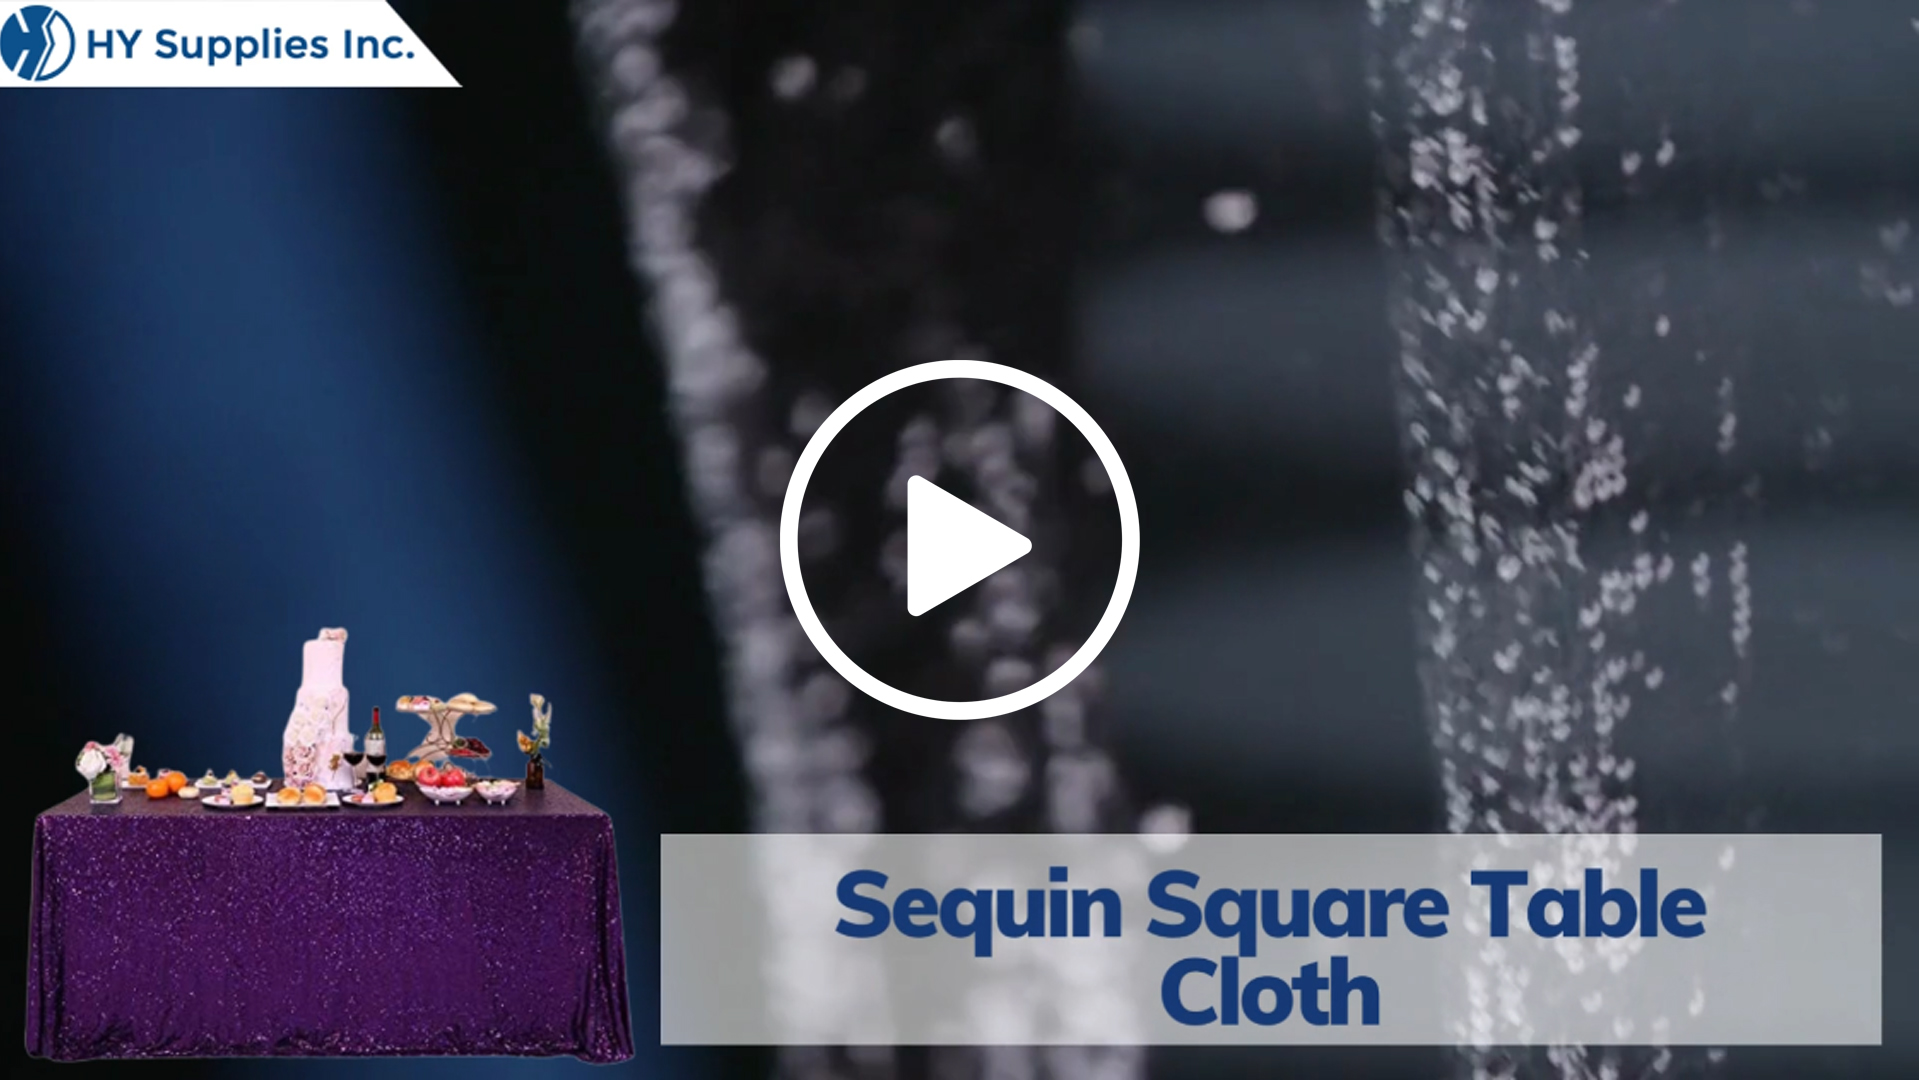 Sequin Square Table Cloth